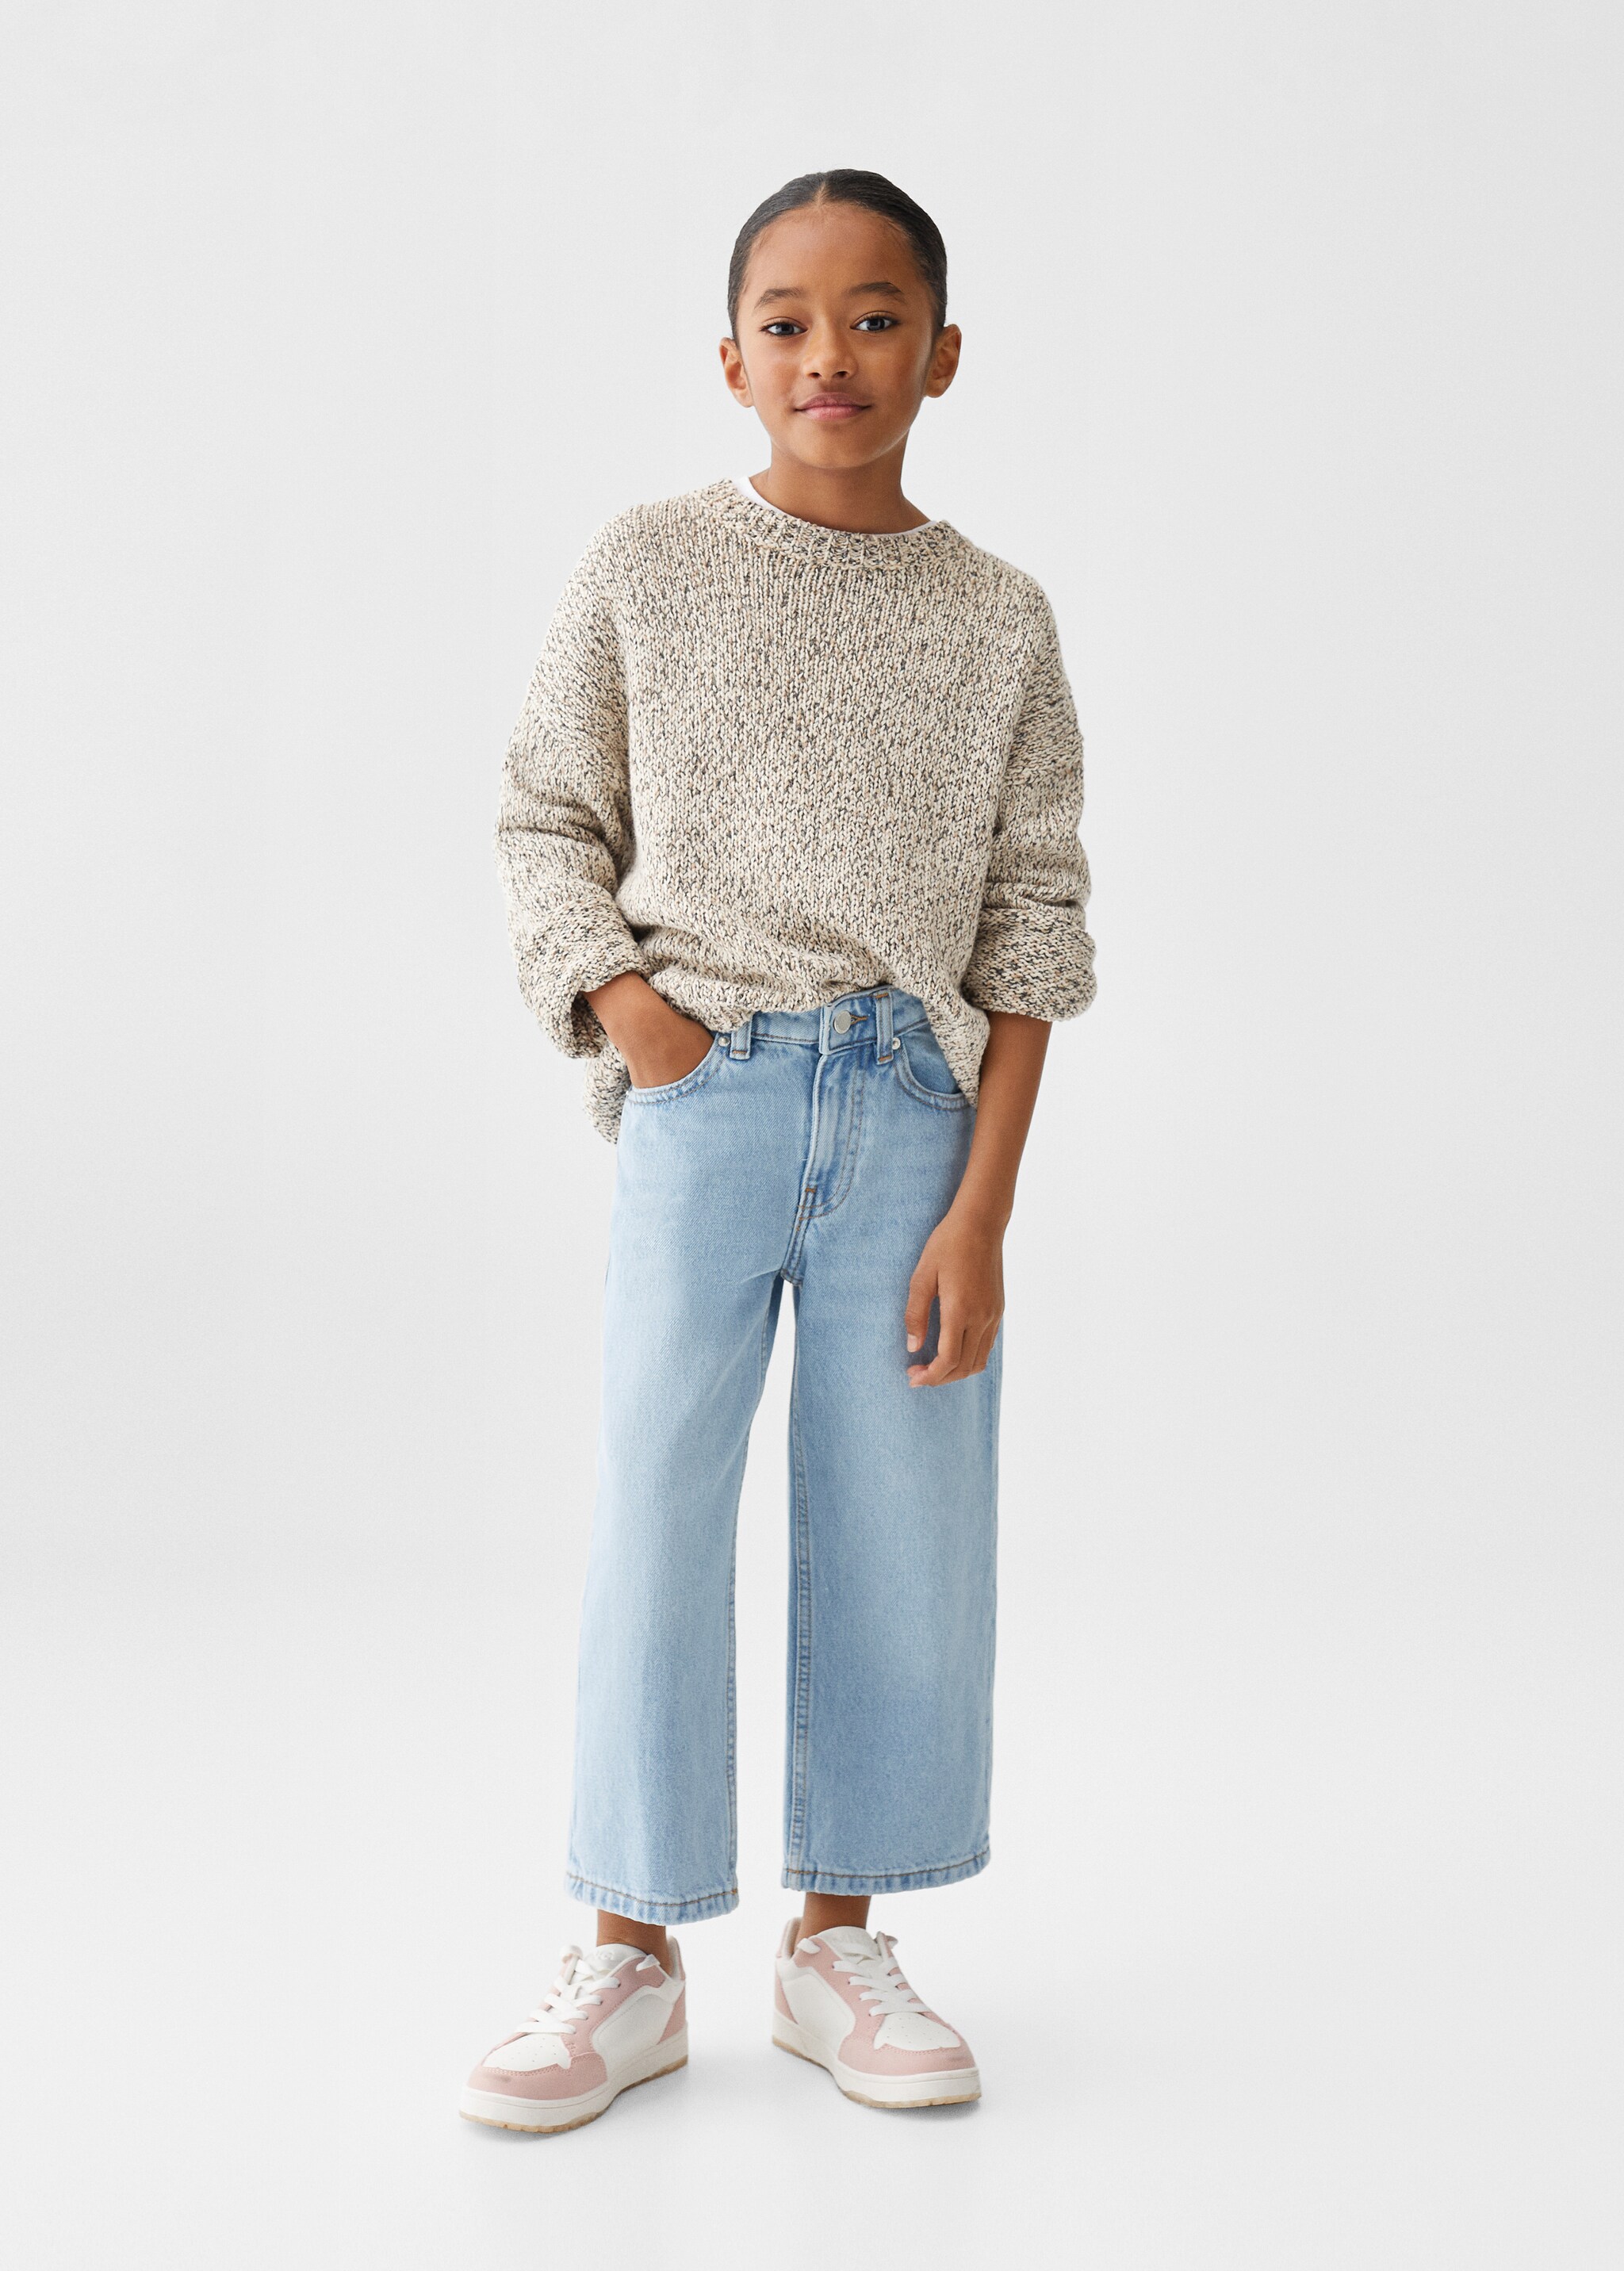 Jeans culotte - Plano general